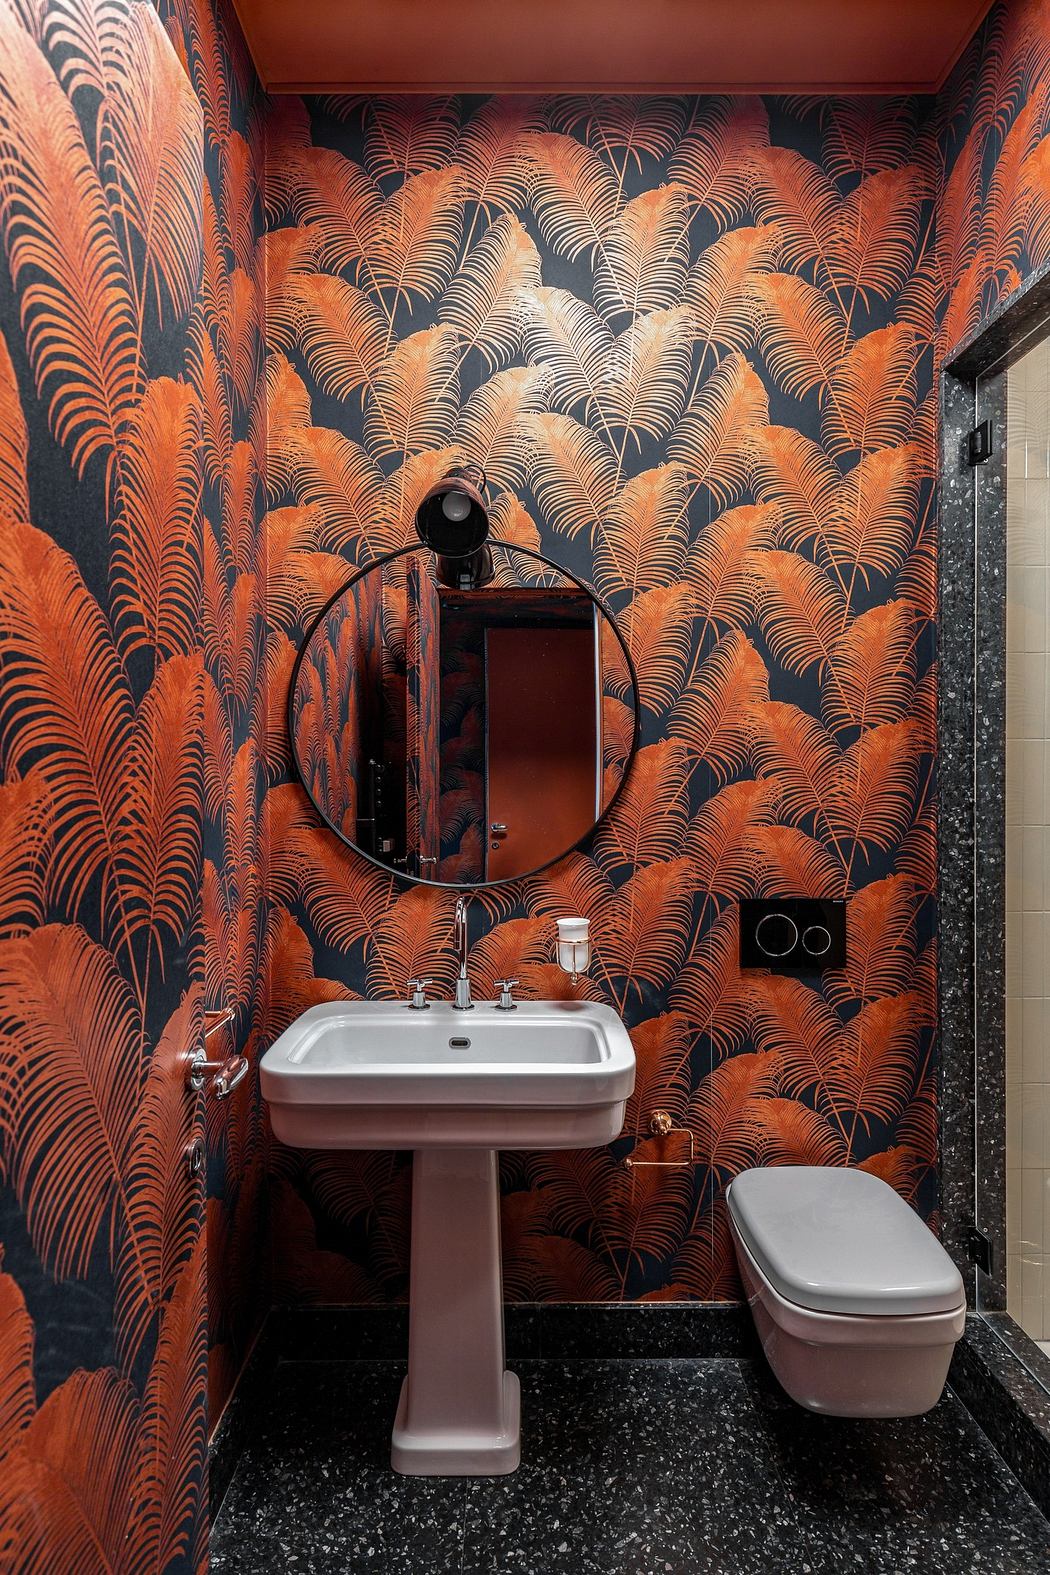 Bathroom with vibrant orange palm wallpaper, pedestal sink, and round mirror.